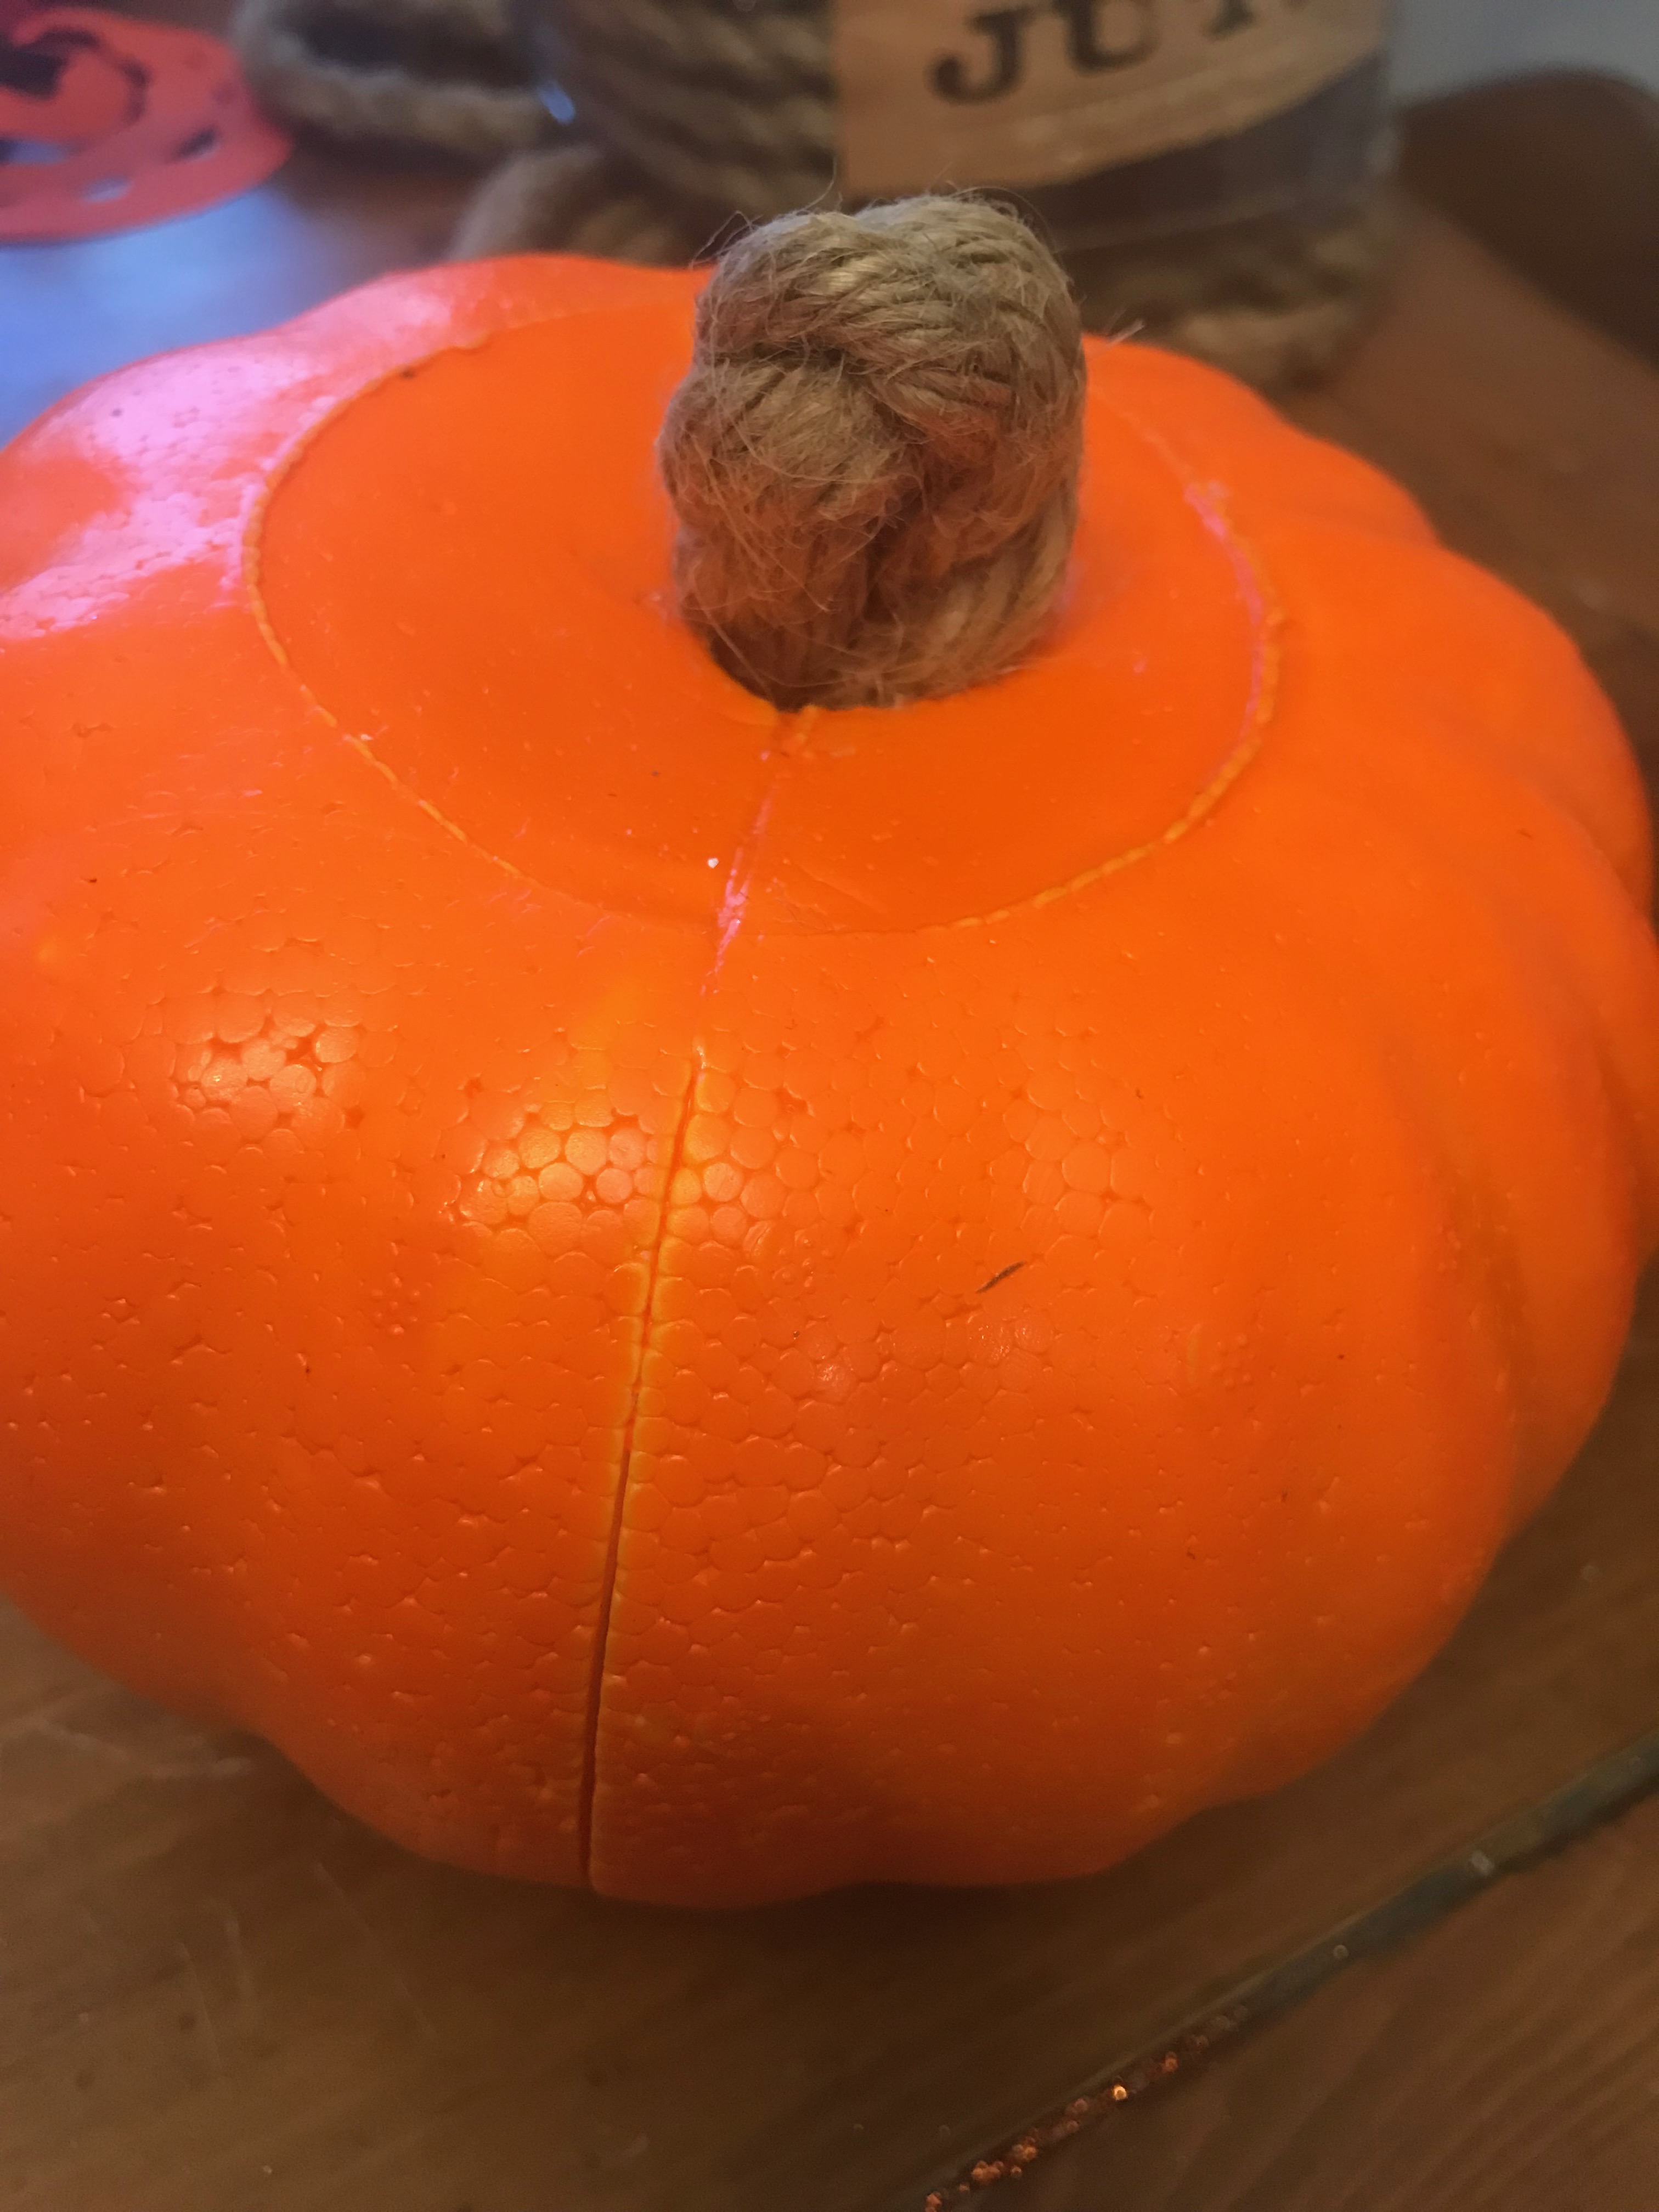 Turn a dollar store pumpkin into a stunning “glampkin” (glamorous pumpkin) with this cheap fall DIY. 